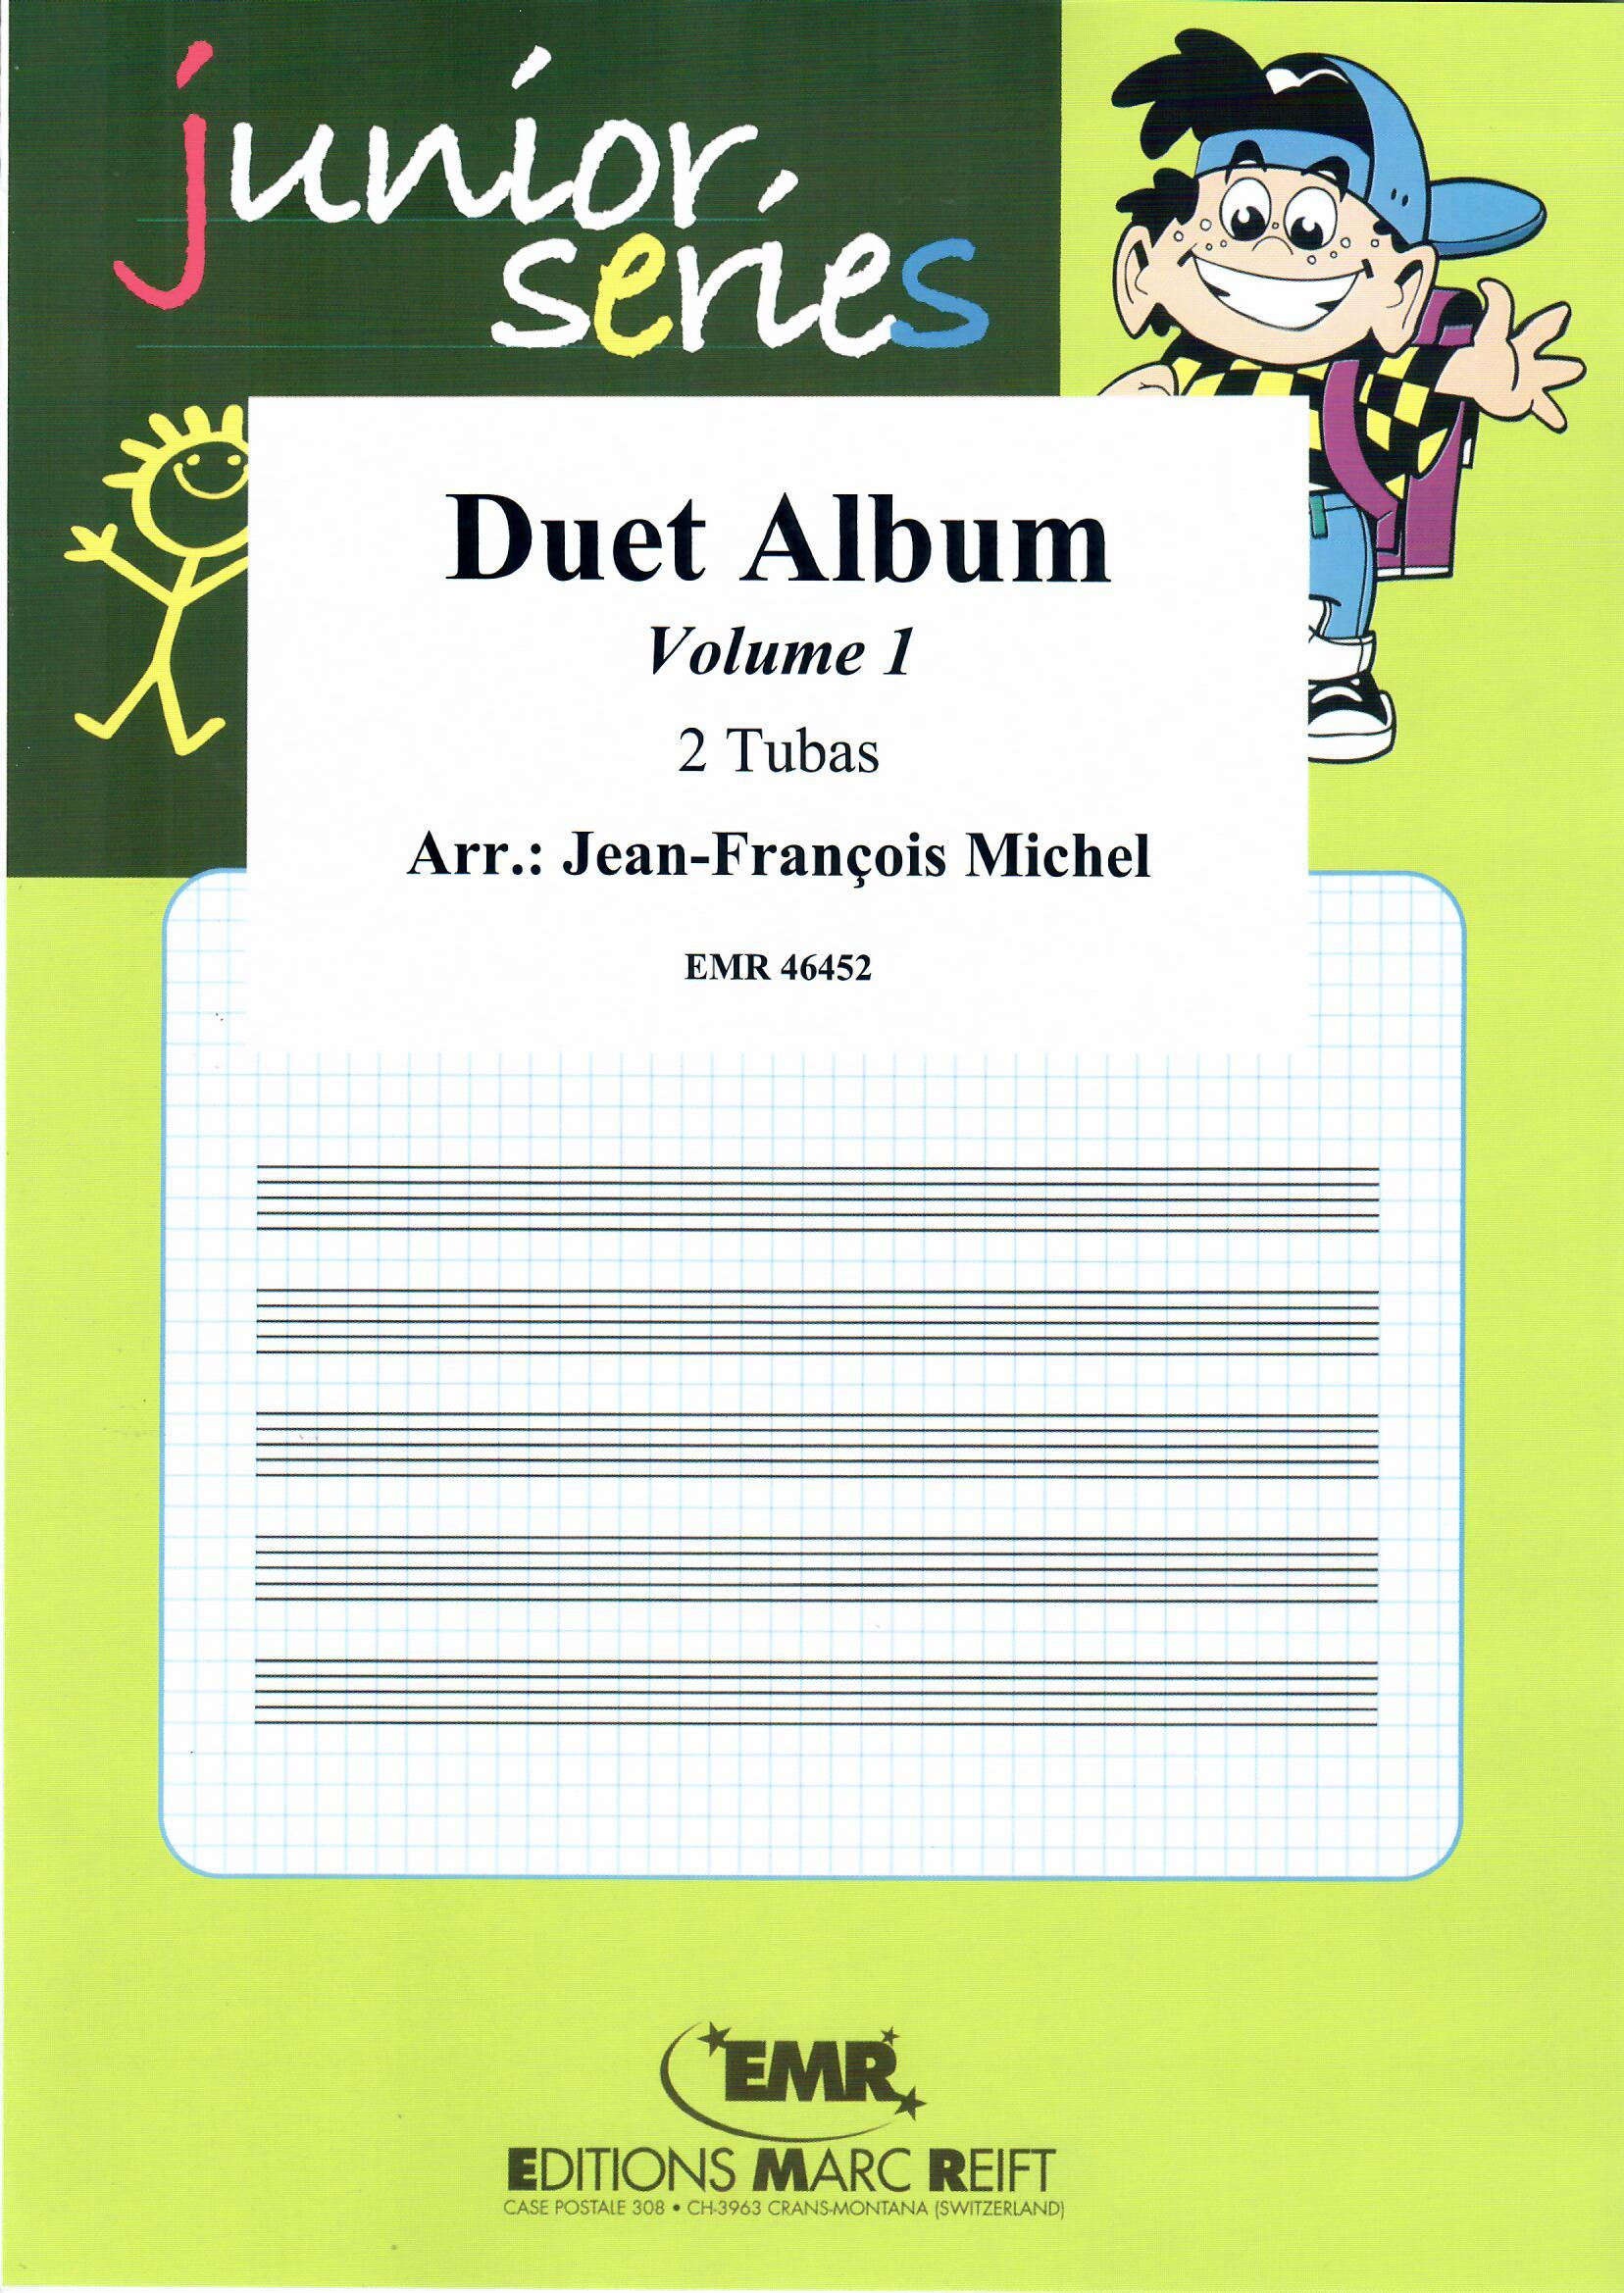 DUET ALBUM VOL. 1 - Tuba Duet